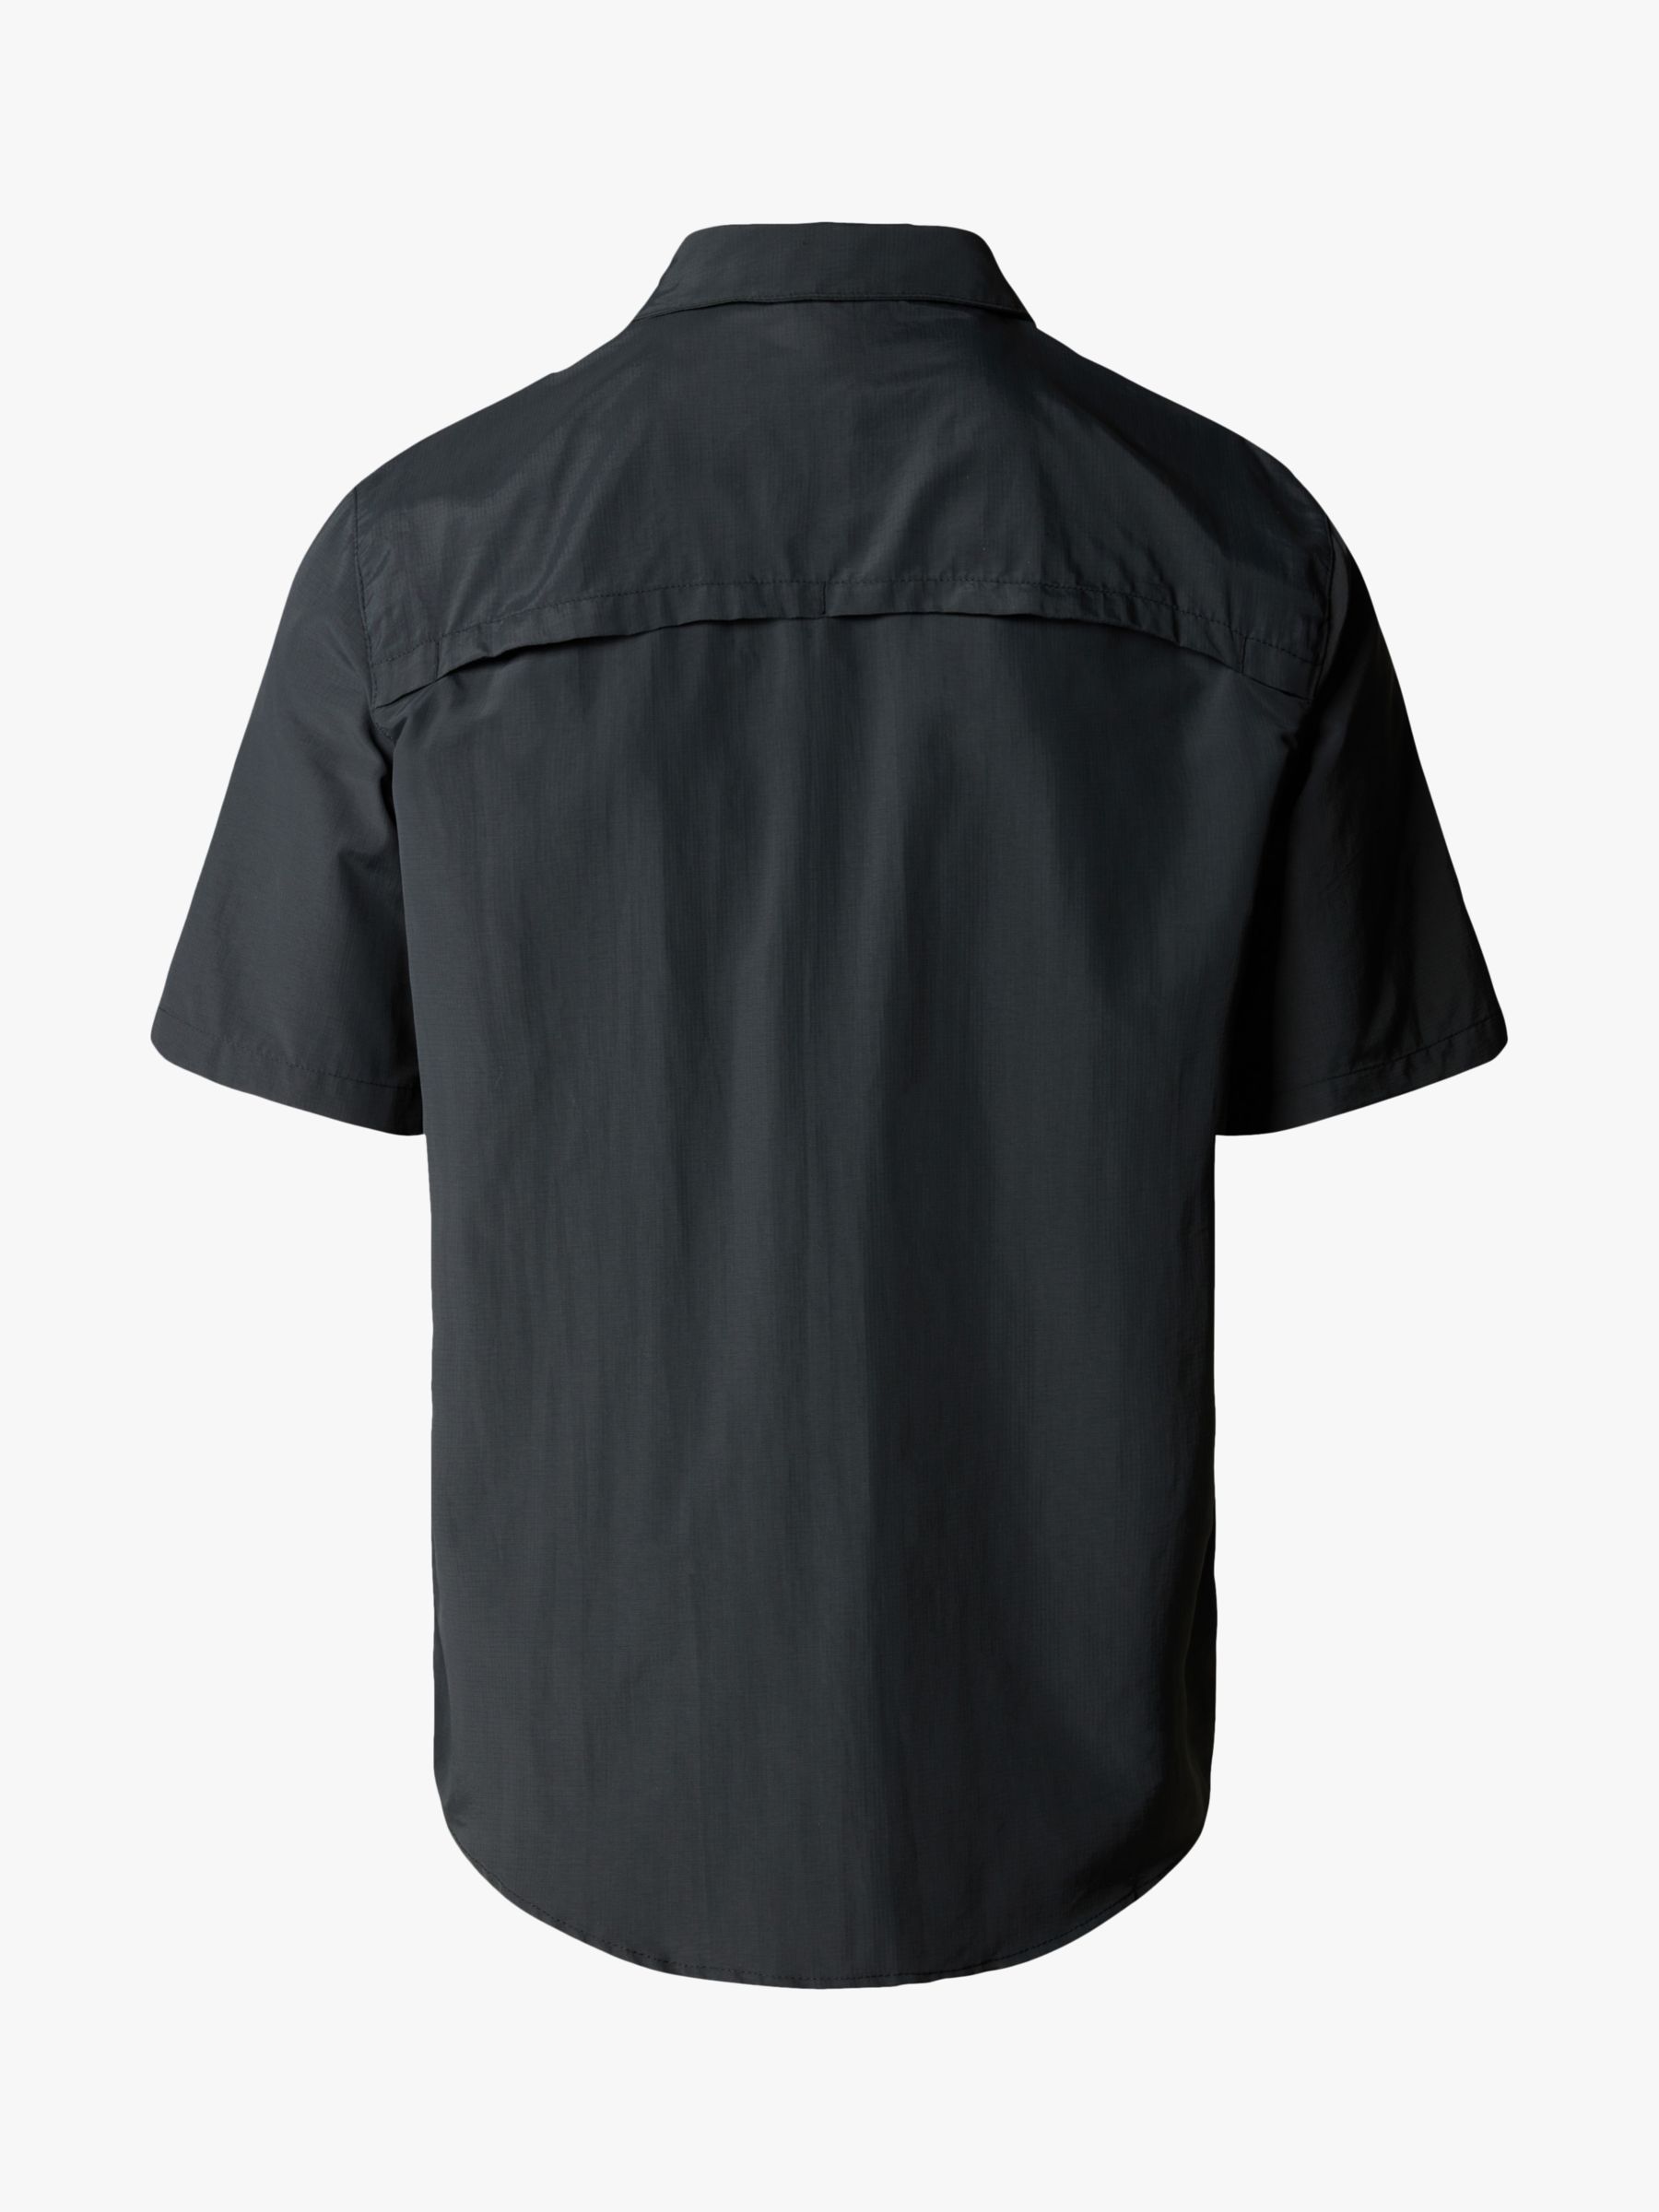 Buy The North Face Short Sleeve Sequoia Shirt, Asphalt Grey Online at johnlewis.com